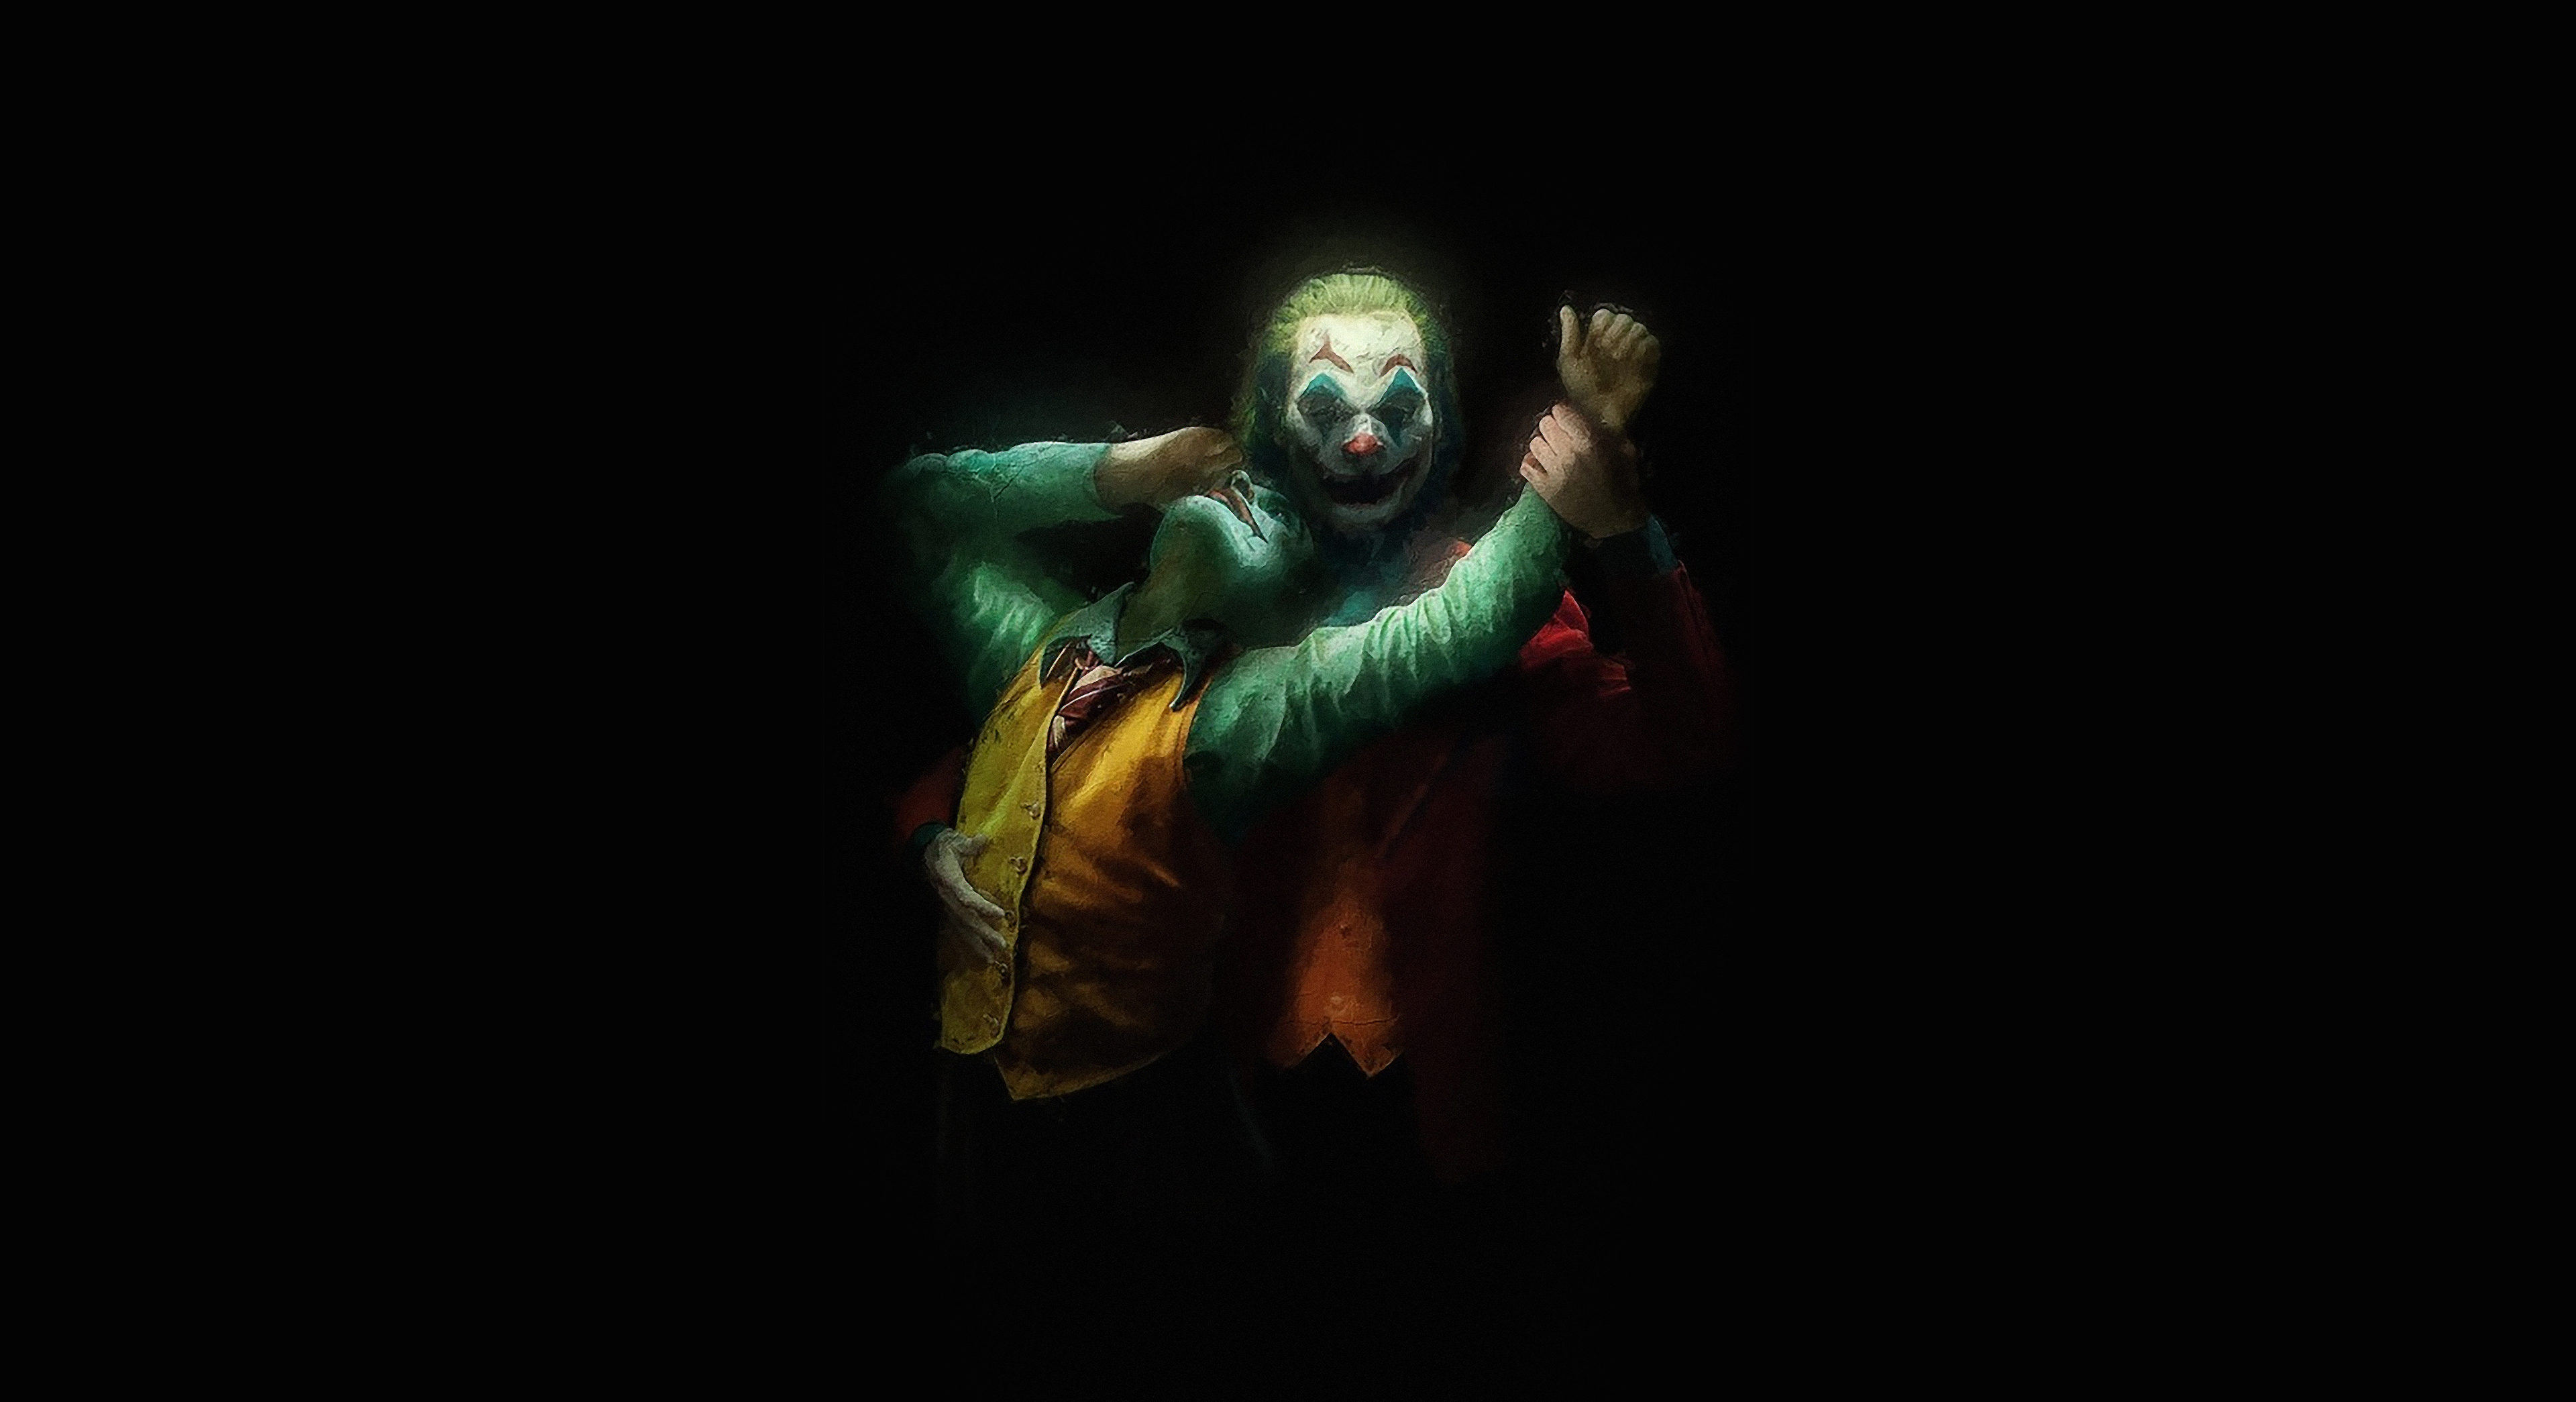 Joker 2019 Art Wallpapers